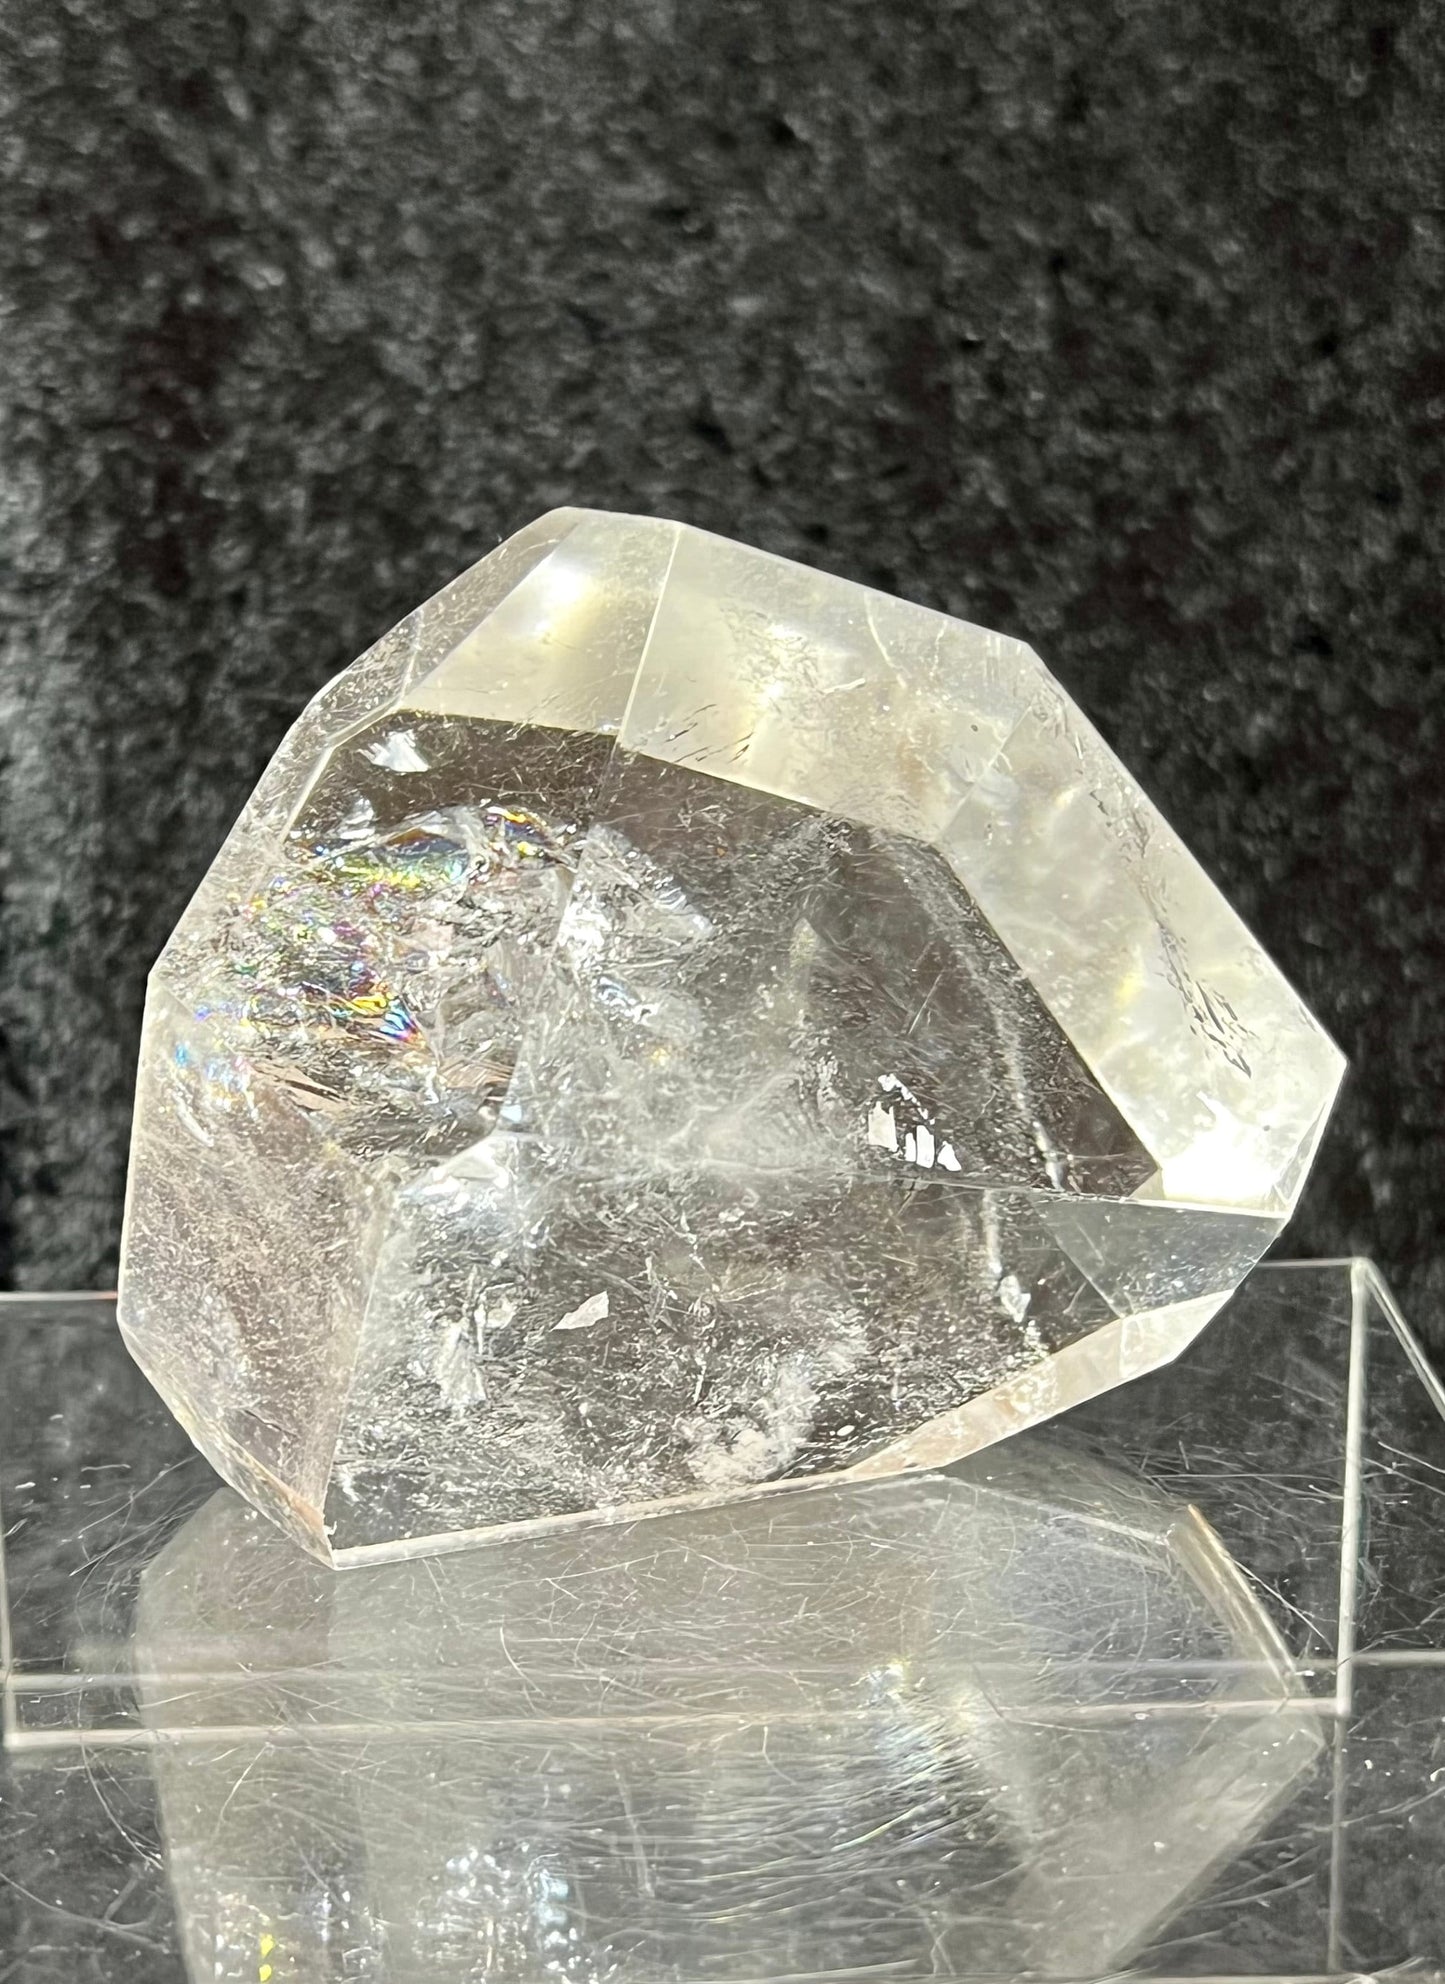 Amazing Clear Quartz Filled With Rainbows! Very Unique Crystal. Polished Clear Quartz Freeform.